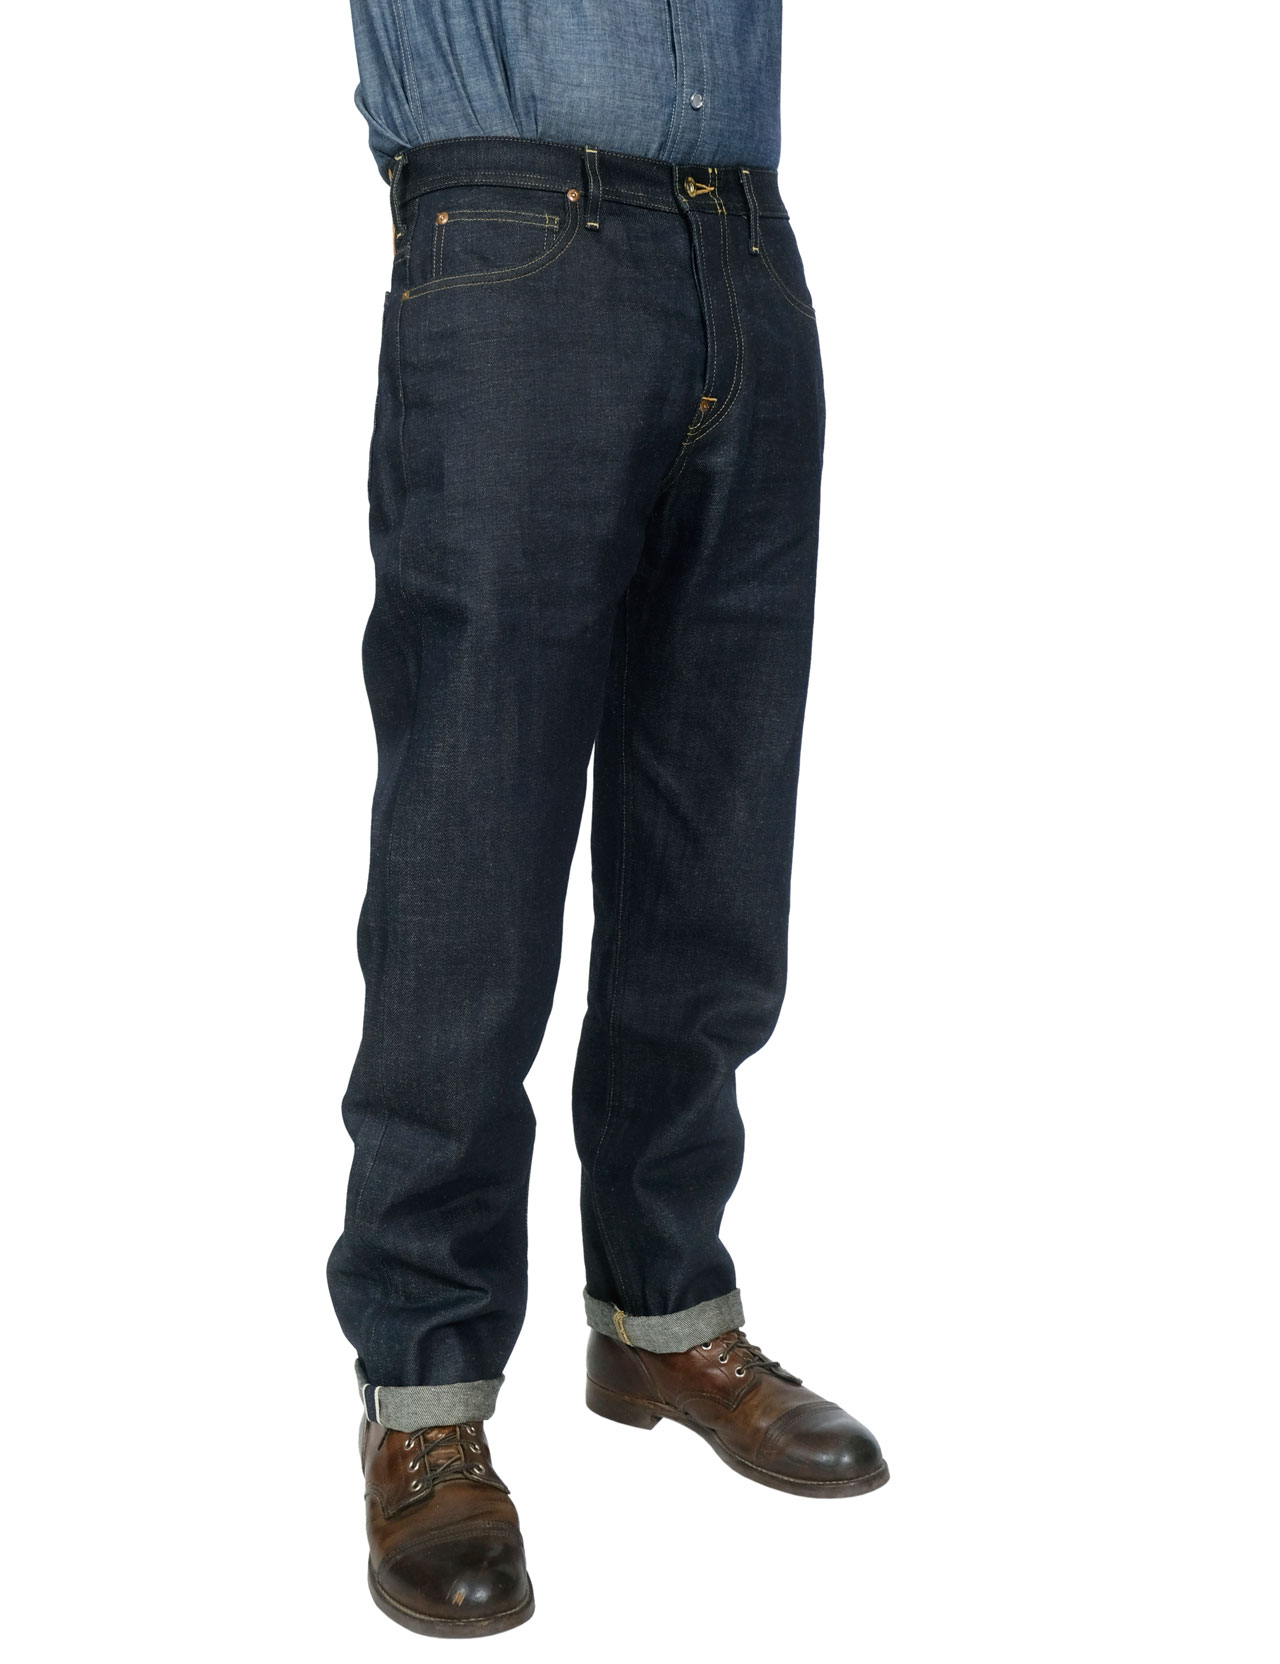 Lee---101-131-Cowboy-Jeans-Dry-Indigo---14oz-99123